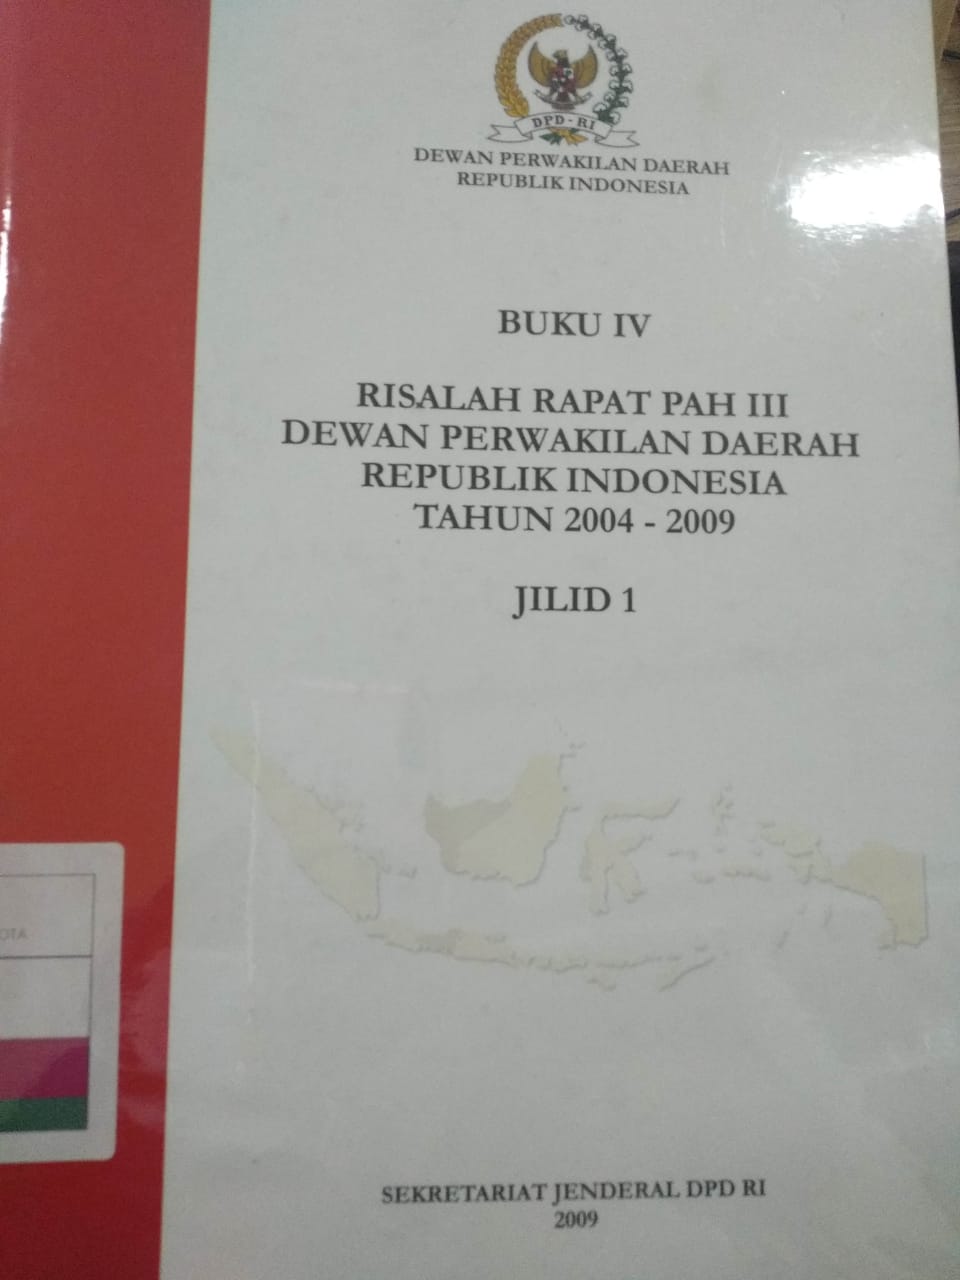 Buku IV. Risalah Rapat PAH III Dewan Perwakilan Daerah Republik Indonesia Tahun 2004 - 2009 Jilid 1